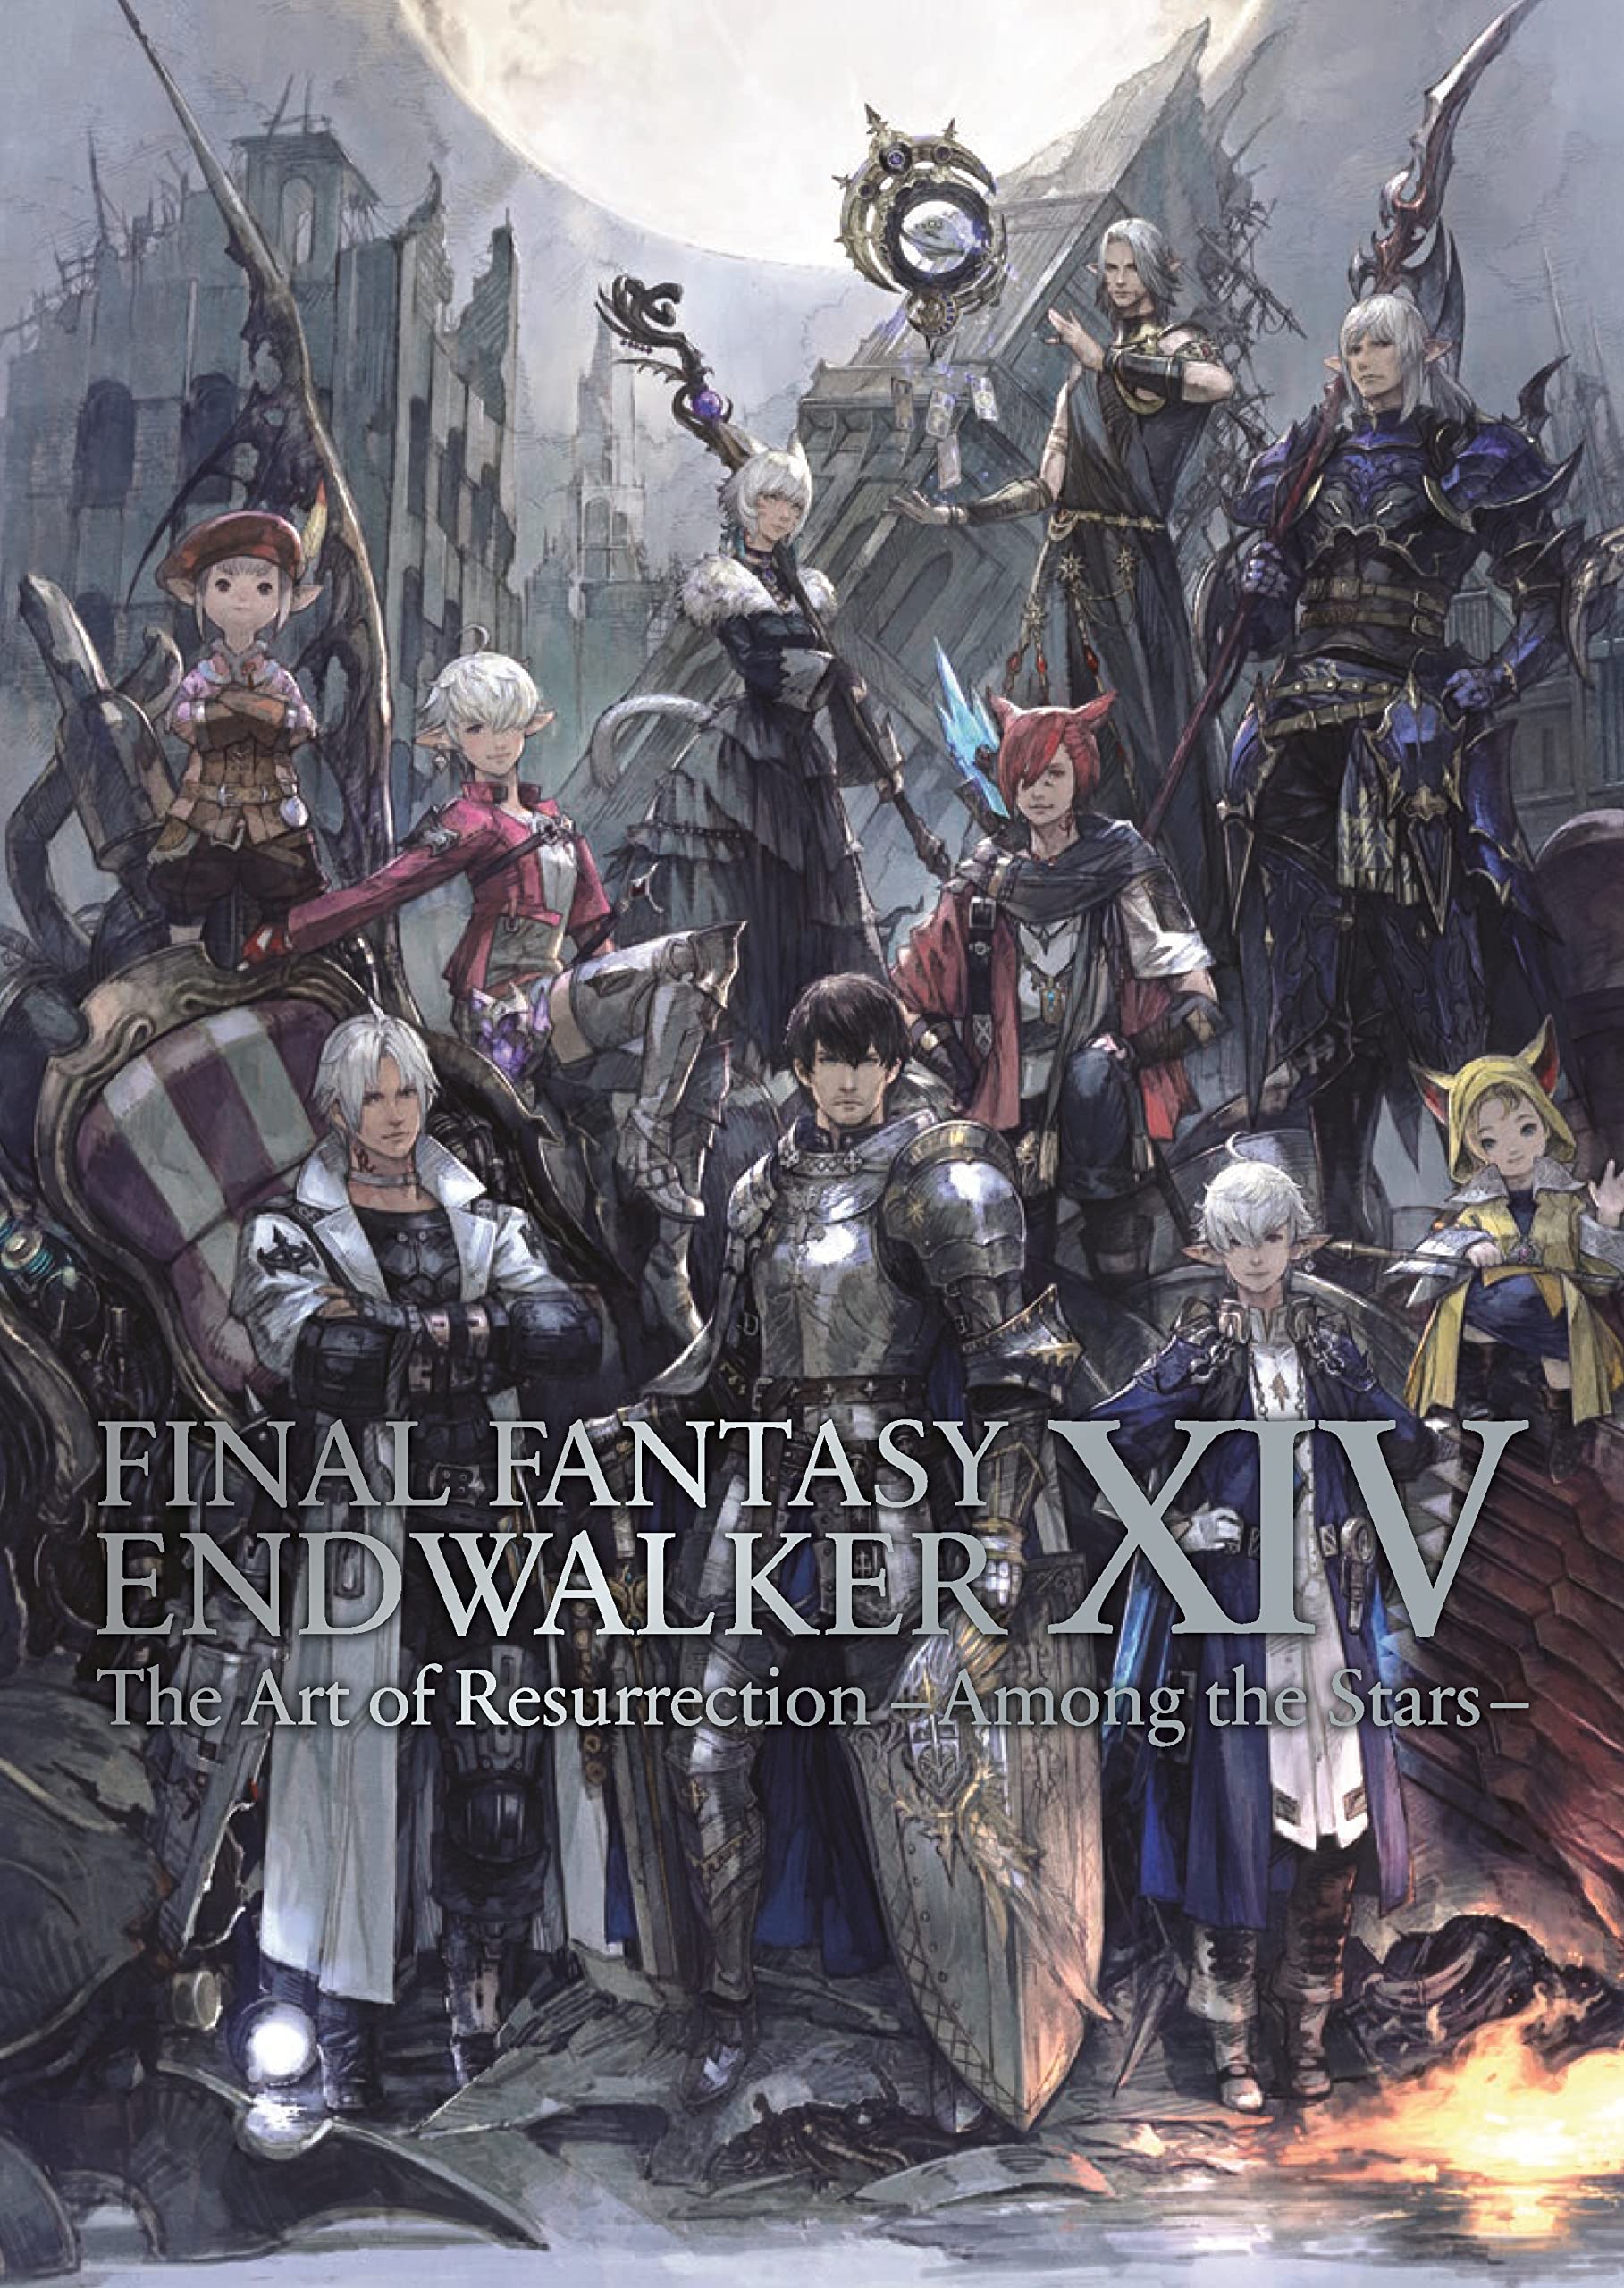 Final Fantasy Xiv Endwalker The Art Of Resurrection Among The Stars Artbook Monomania